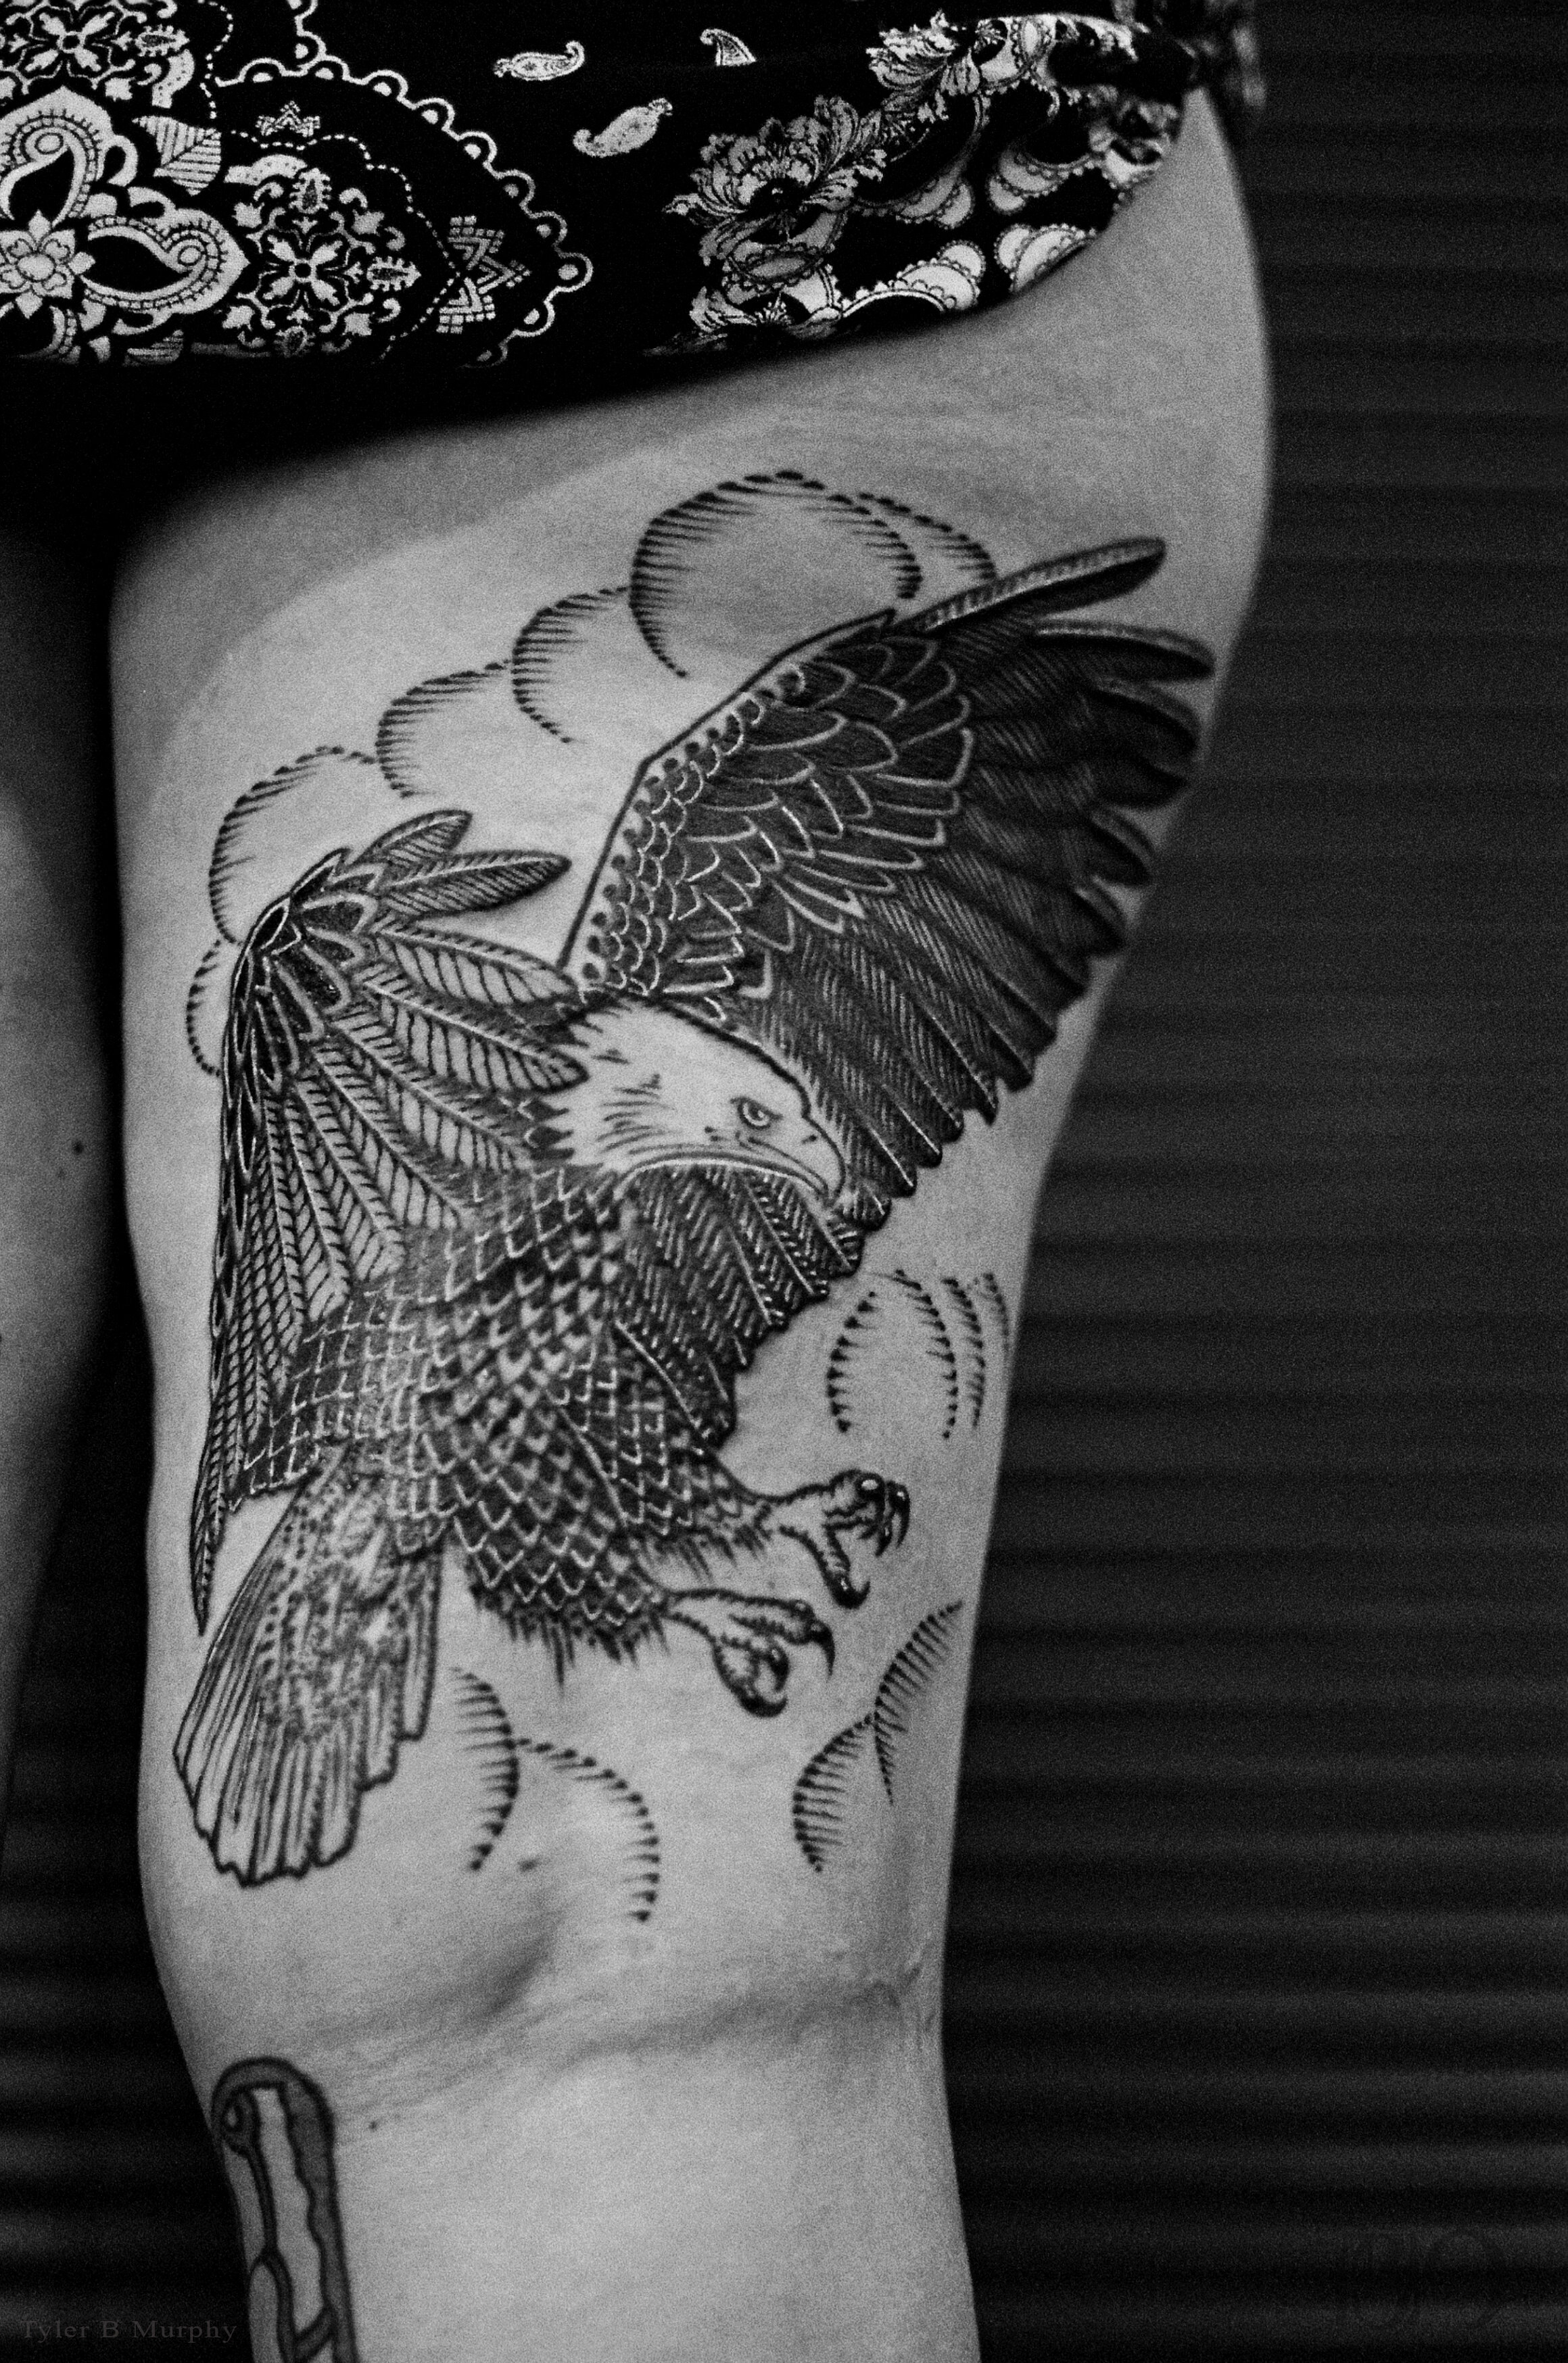 20a -Eagle tattoo Tyler B Murphy copy.jpg